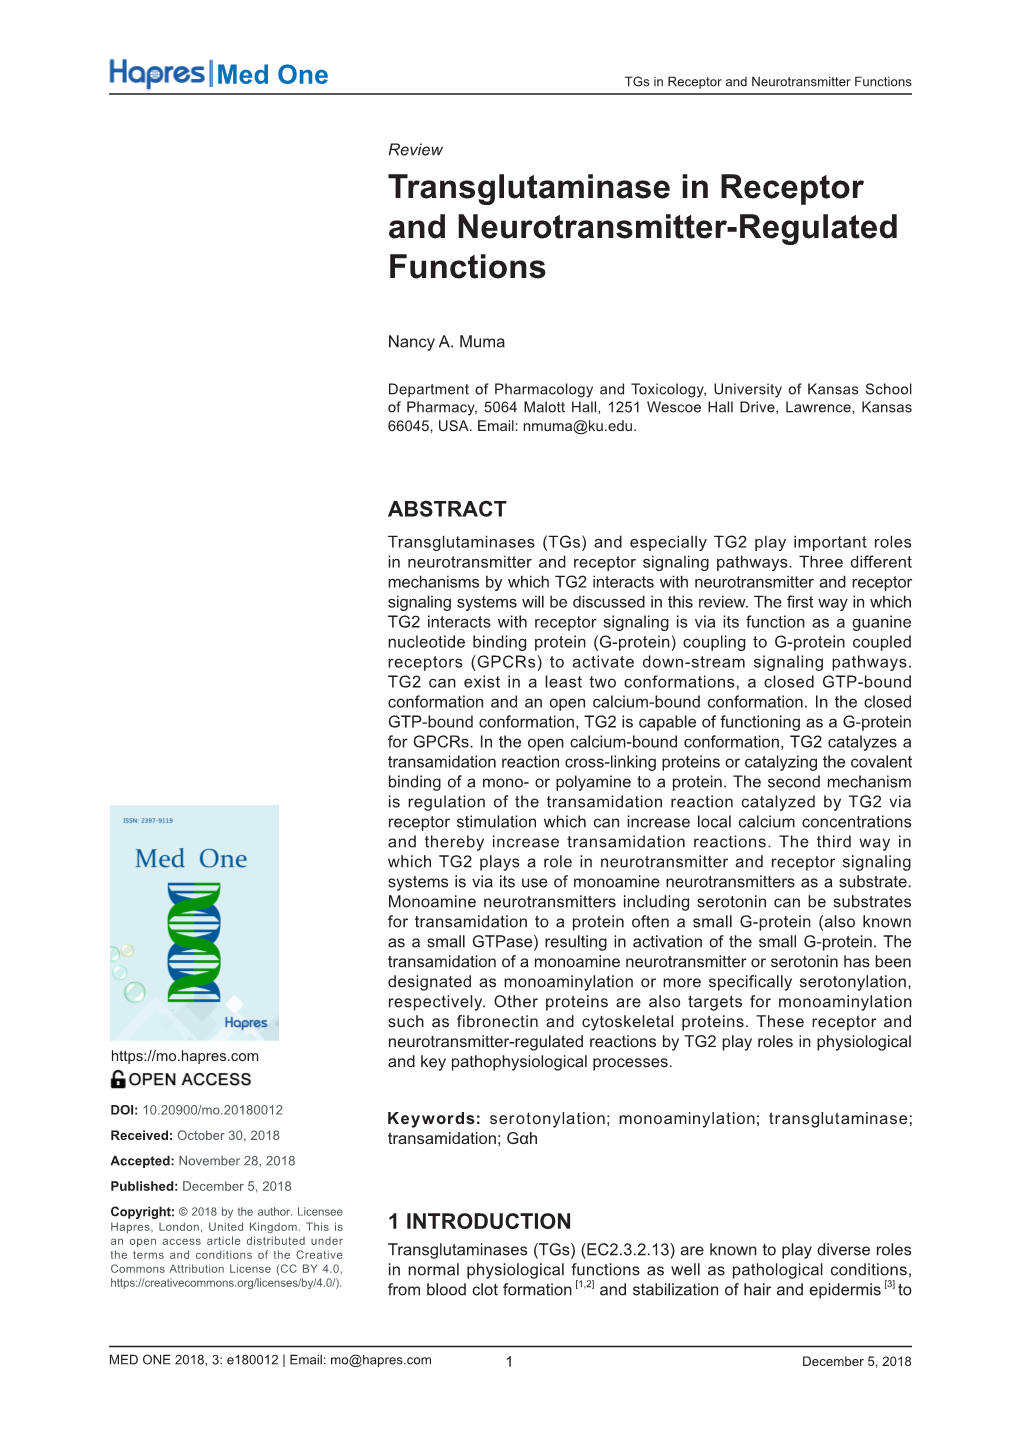 Transglutaminase in Receptor and Neurotransmitter-Regulated Functions